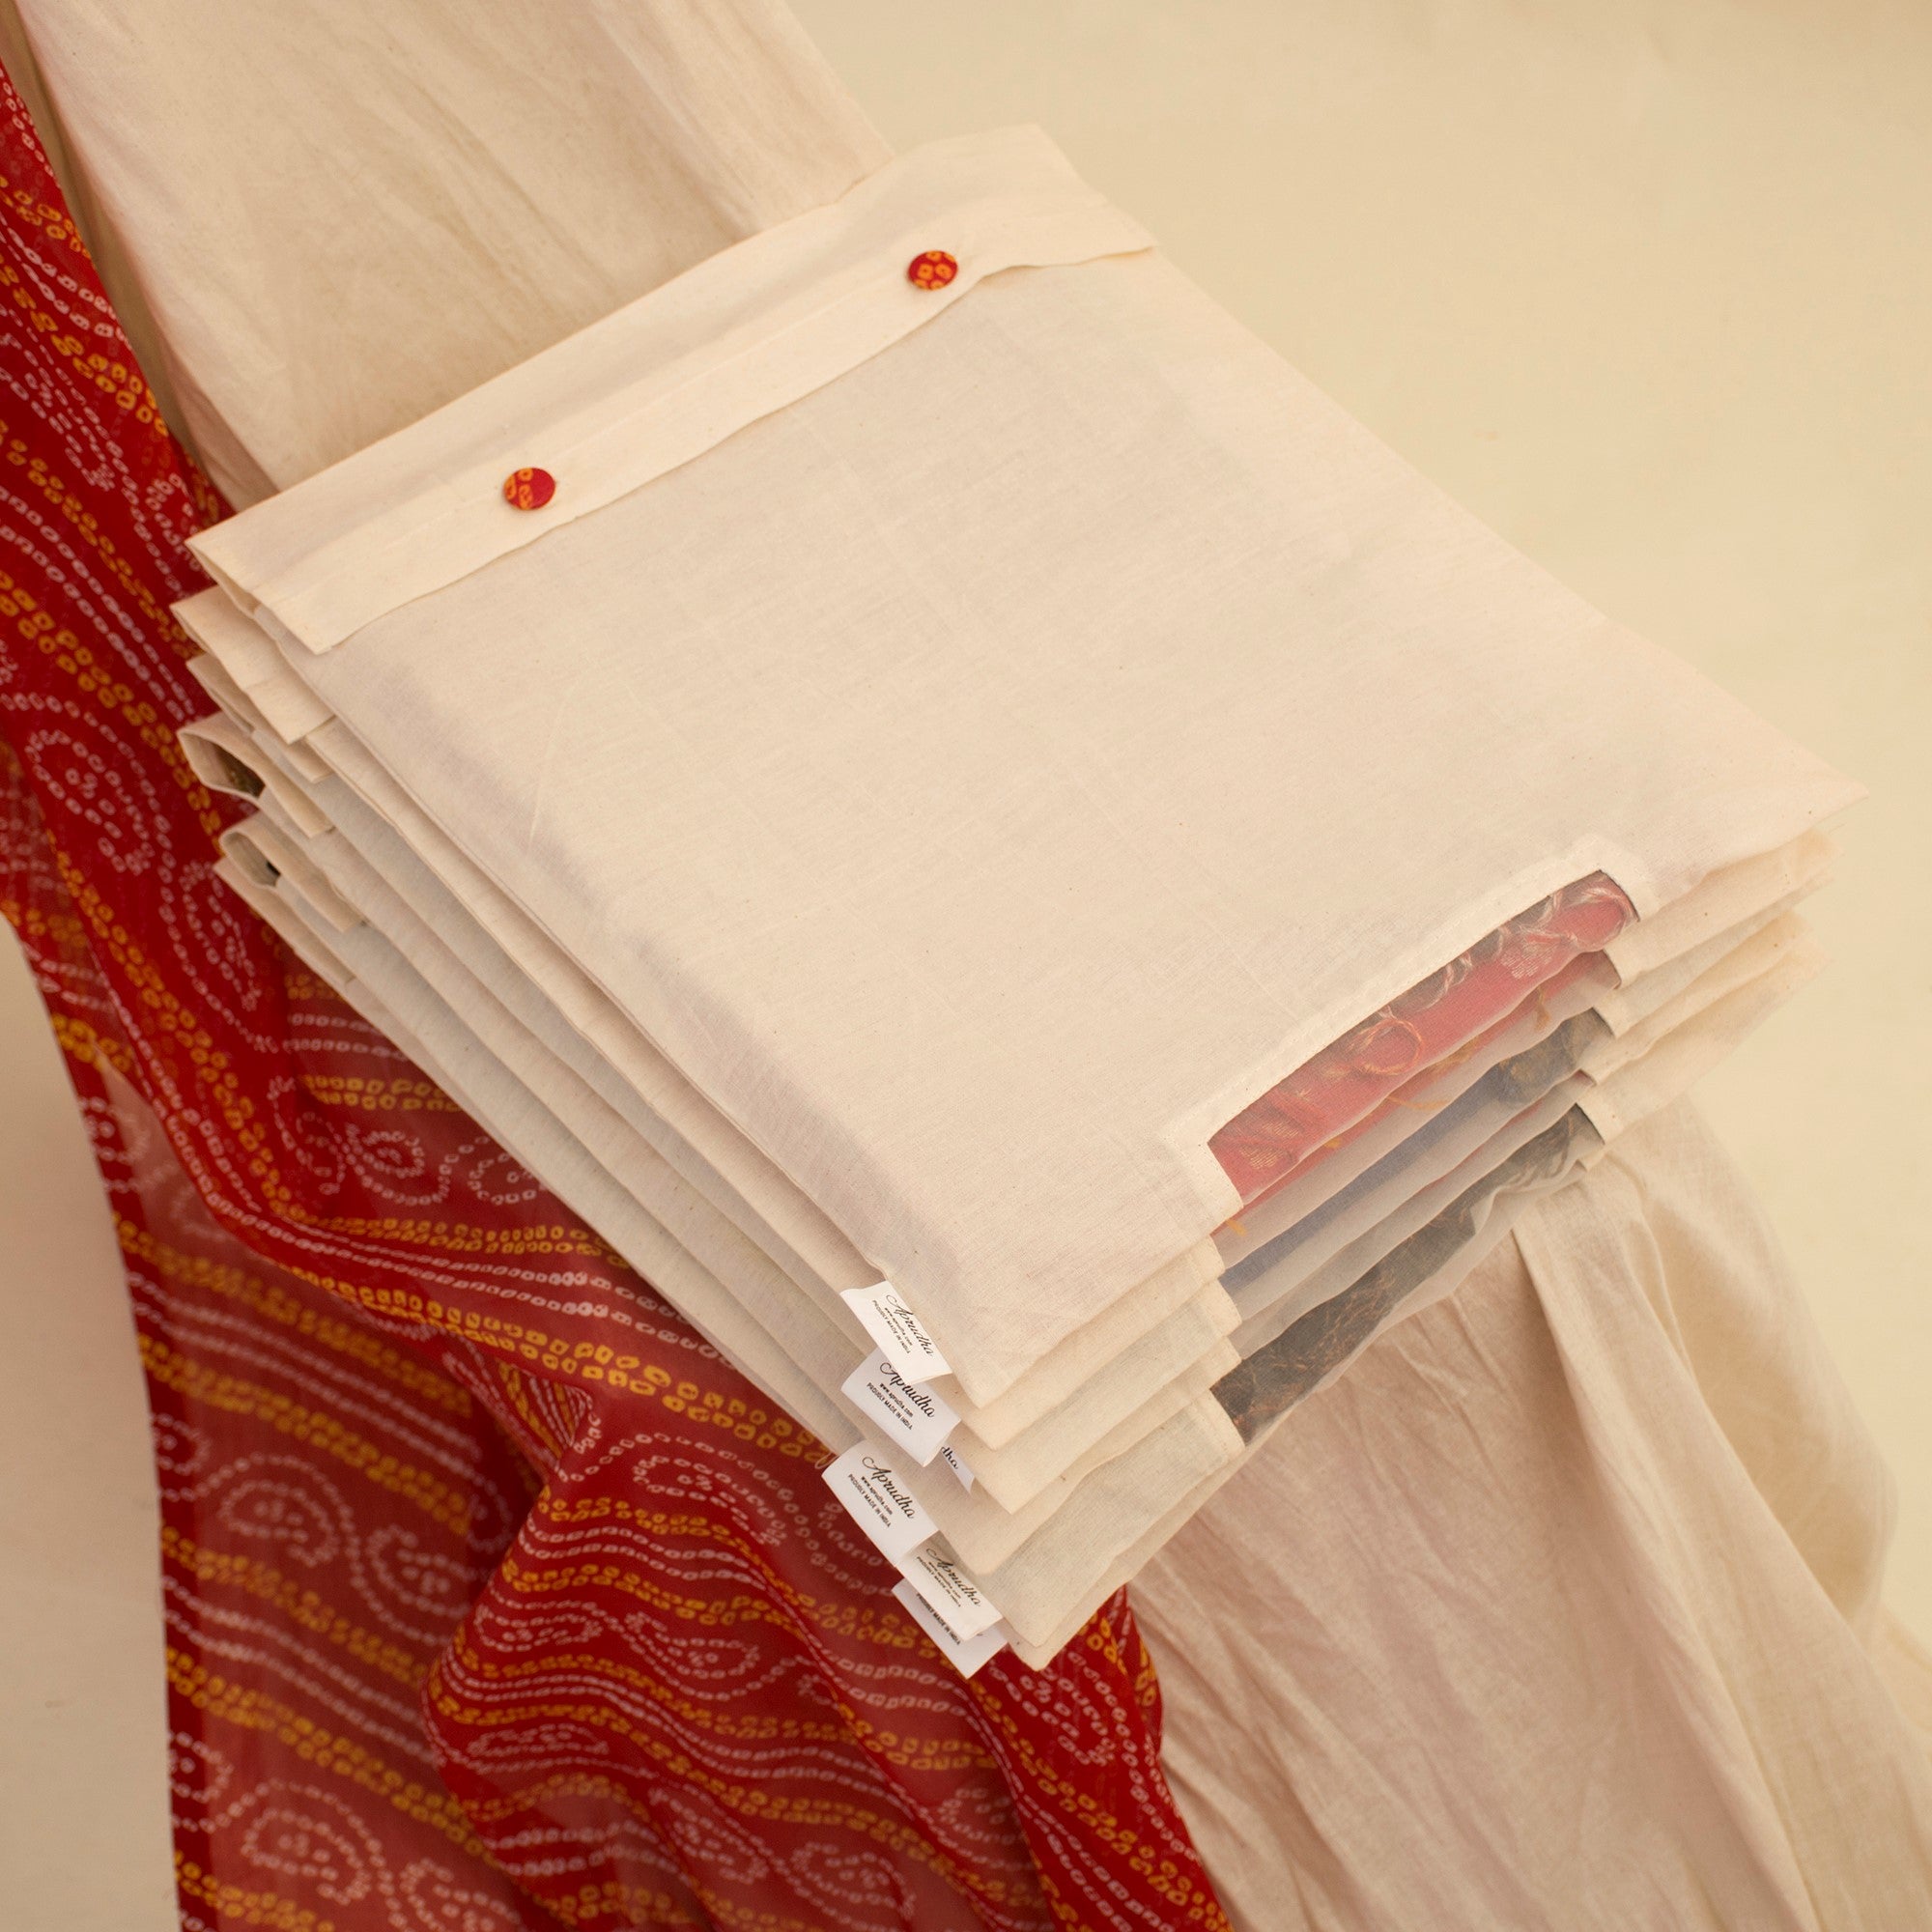 Handmade Fabric Purse (Never Used) | eBay